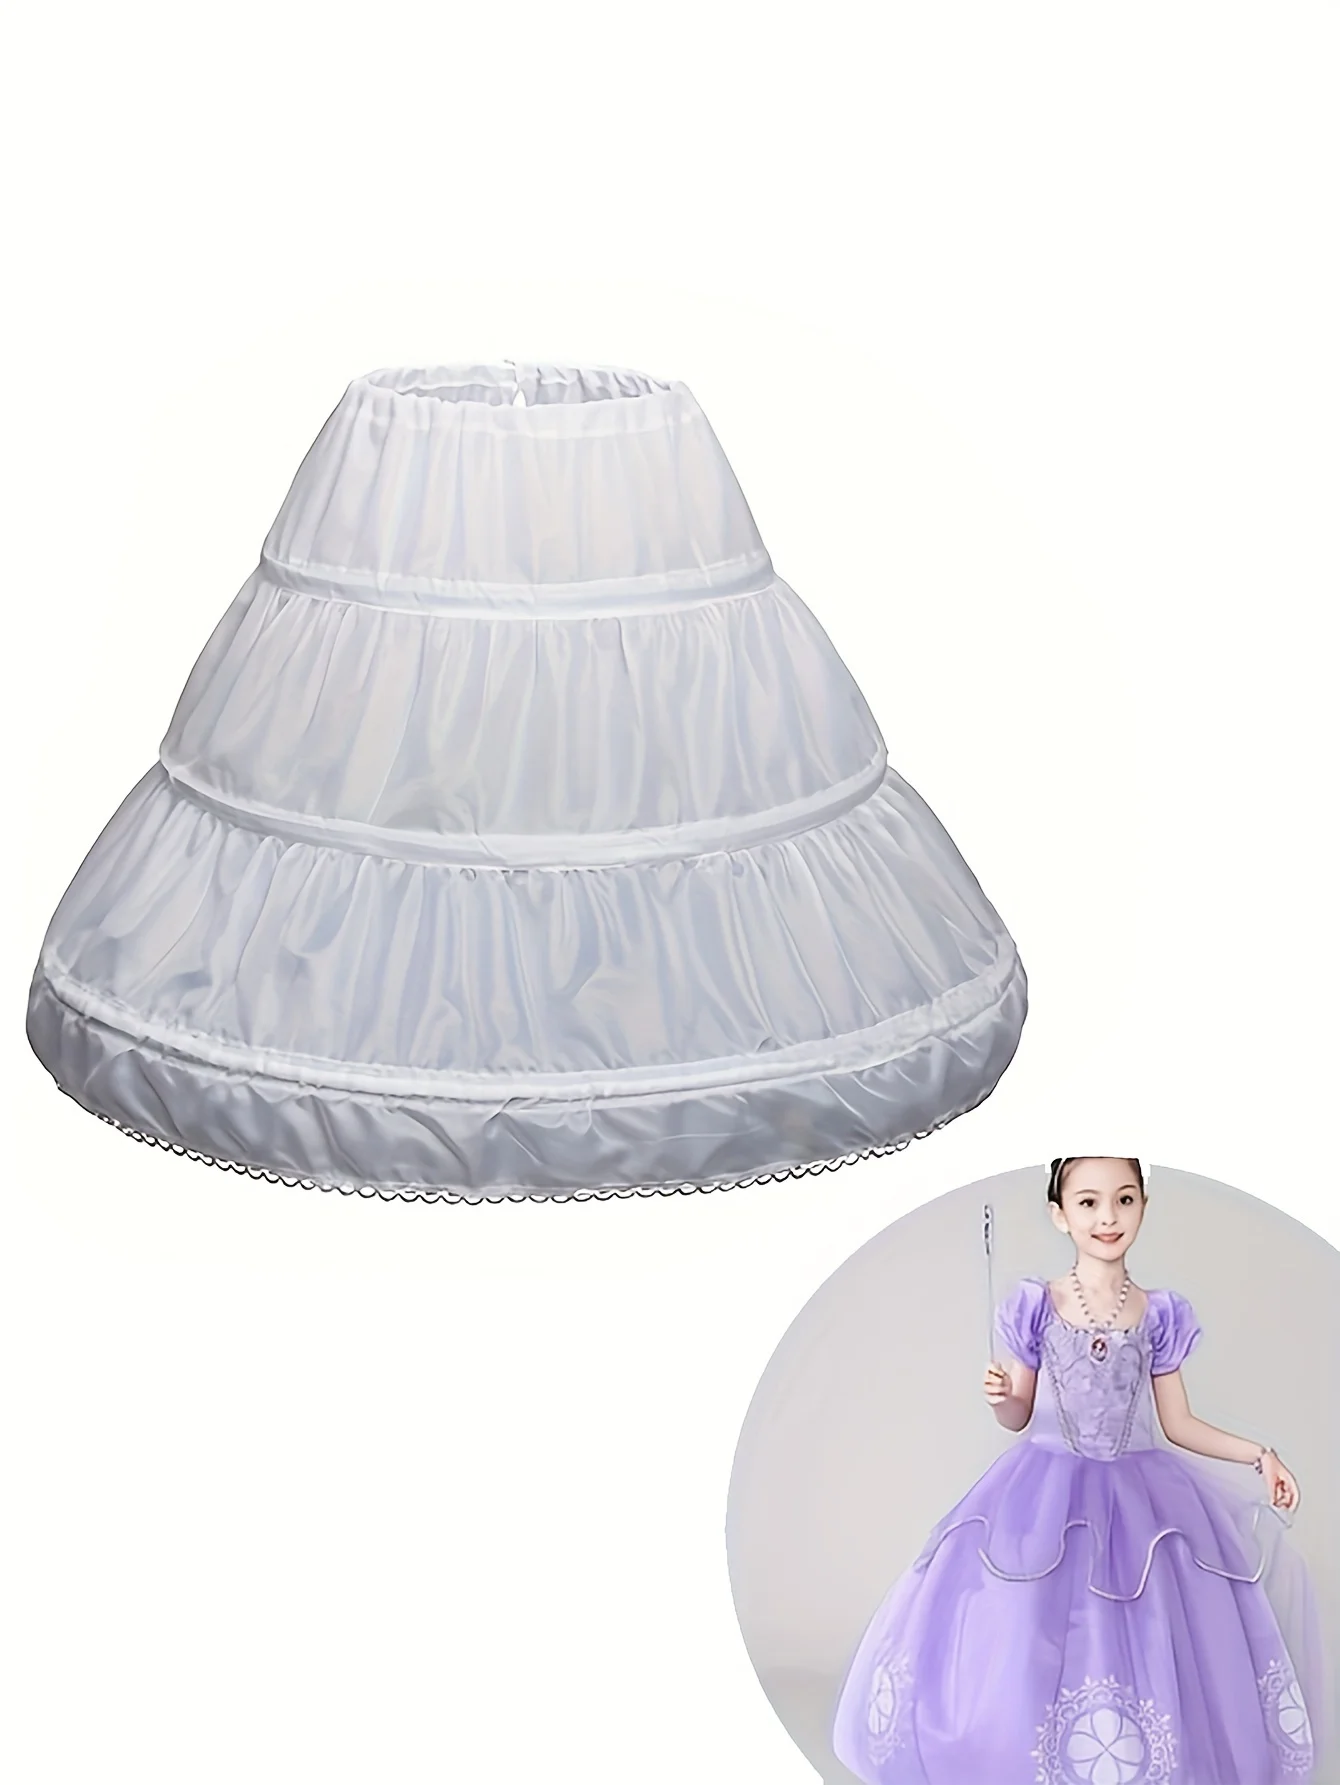 Kinder Vintage Short Petticoat für Mädchen Ballett Blase Tutu Rock Rock N Roll Rockabilly Rock Tutu Unterrock Slips